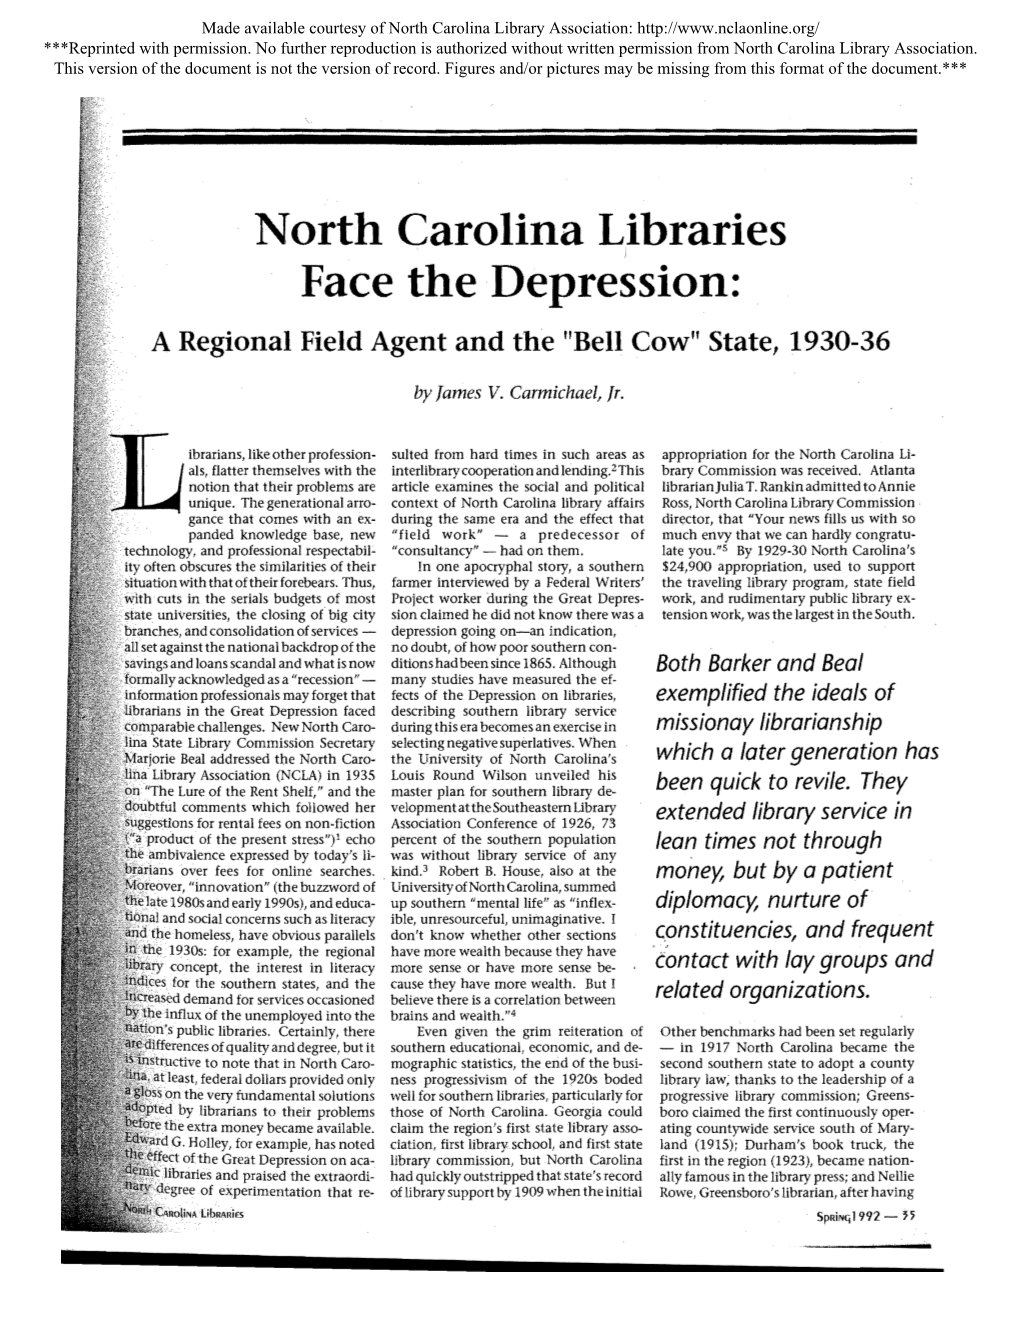 North Carolina Libraries Face the Depression